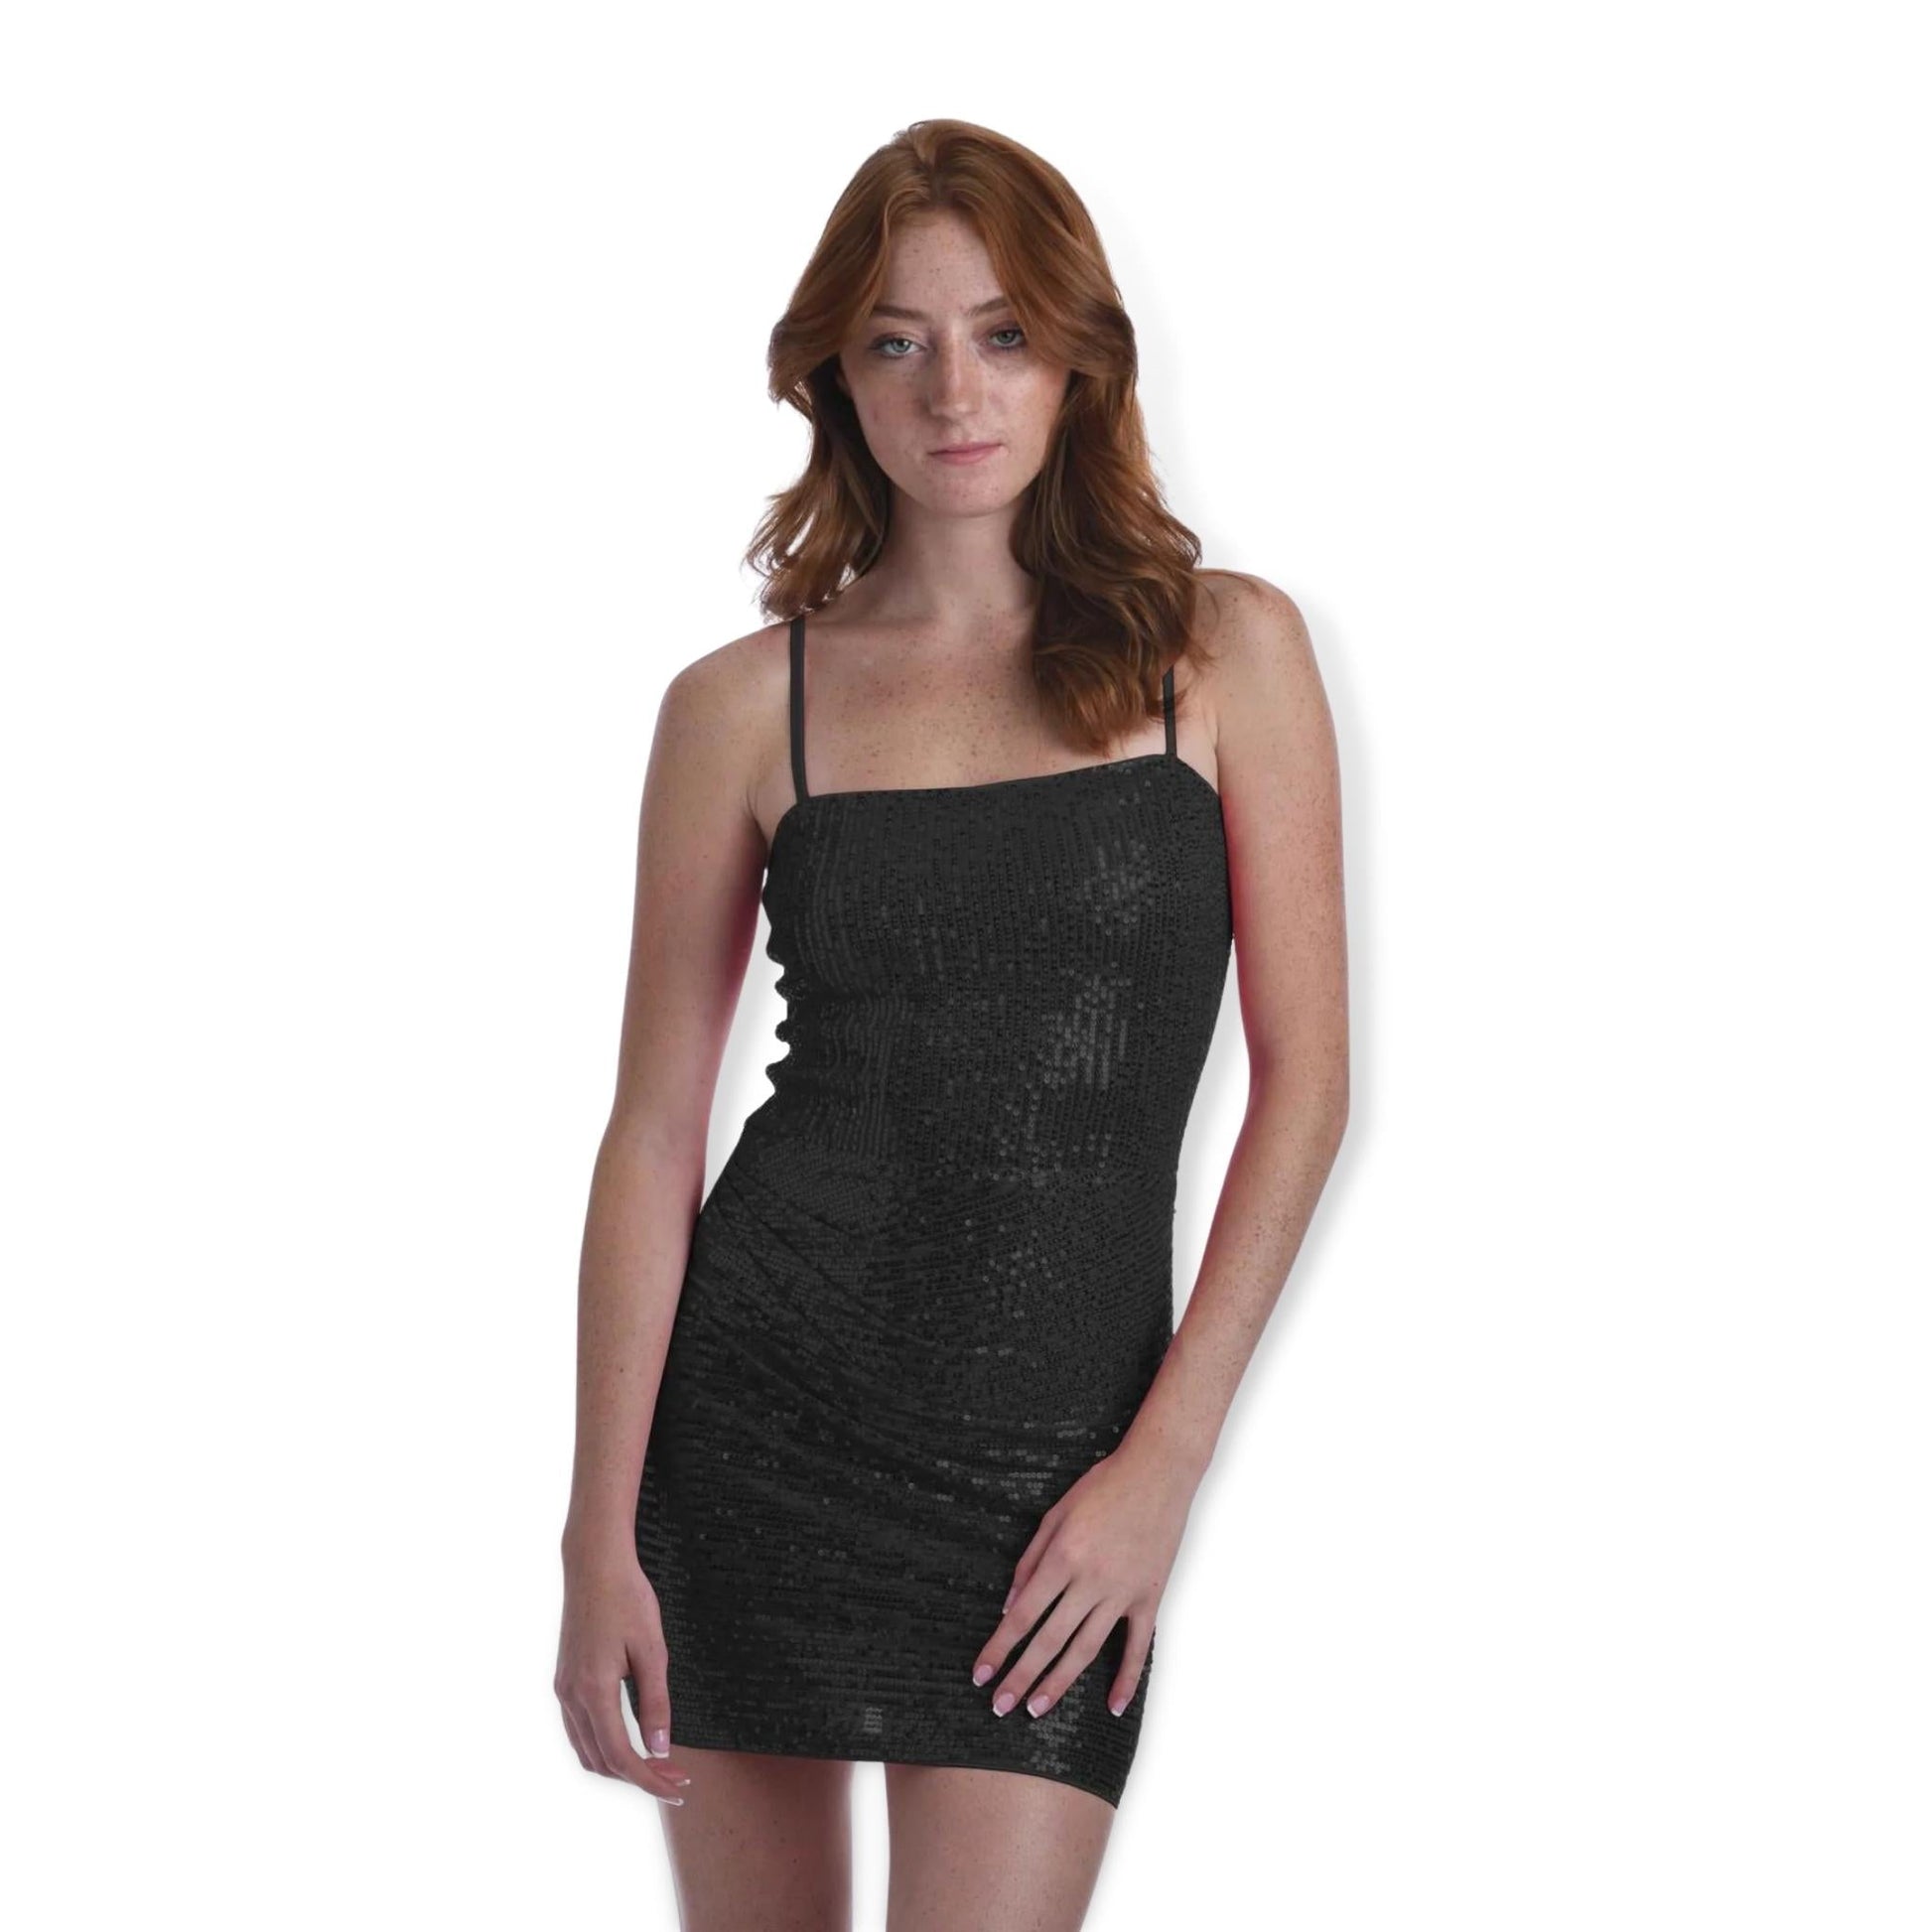 KatieJNYC Black Maddy Dress Jr. - a Spirit Animal - Dress $120-$150 active Sep 2022 black